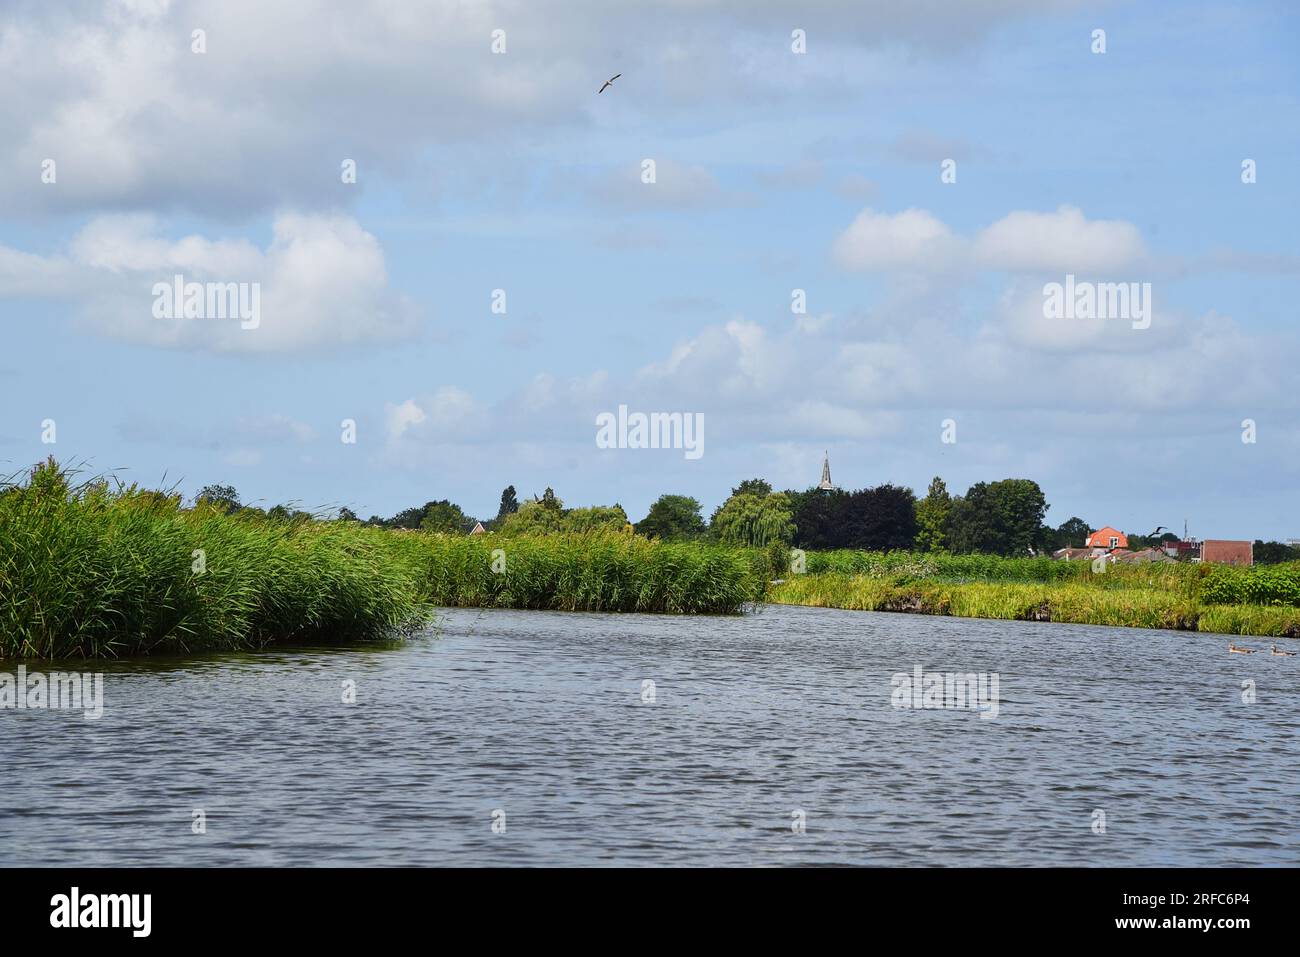 Broek op langedijk hi-res stock photography and images - Alamy